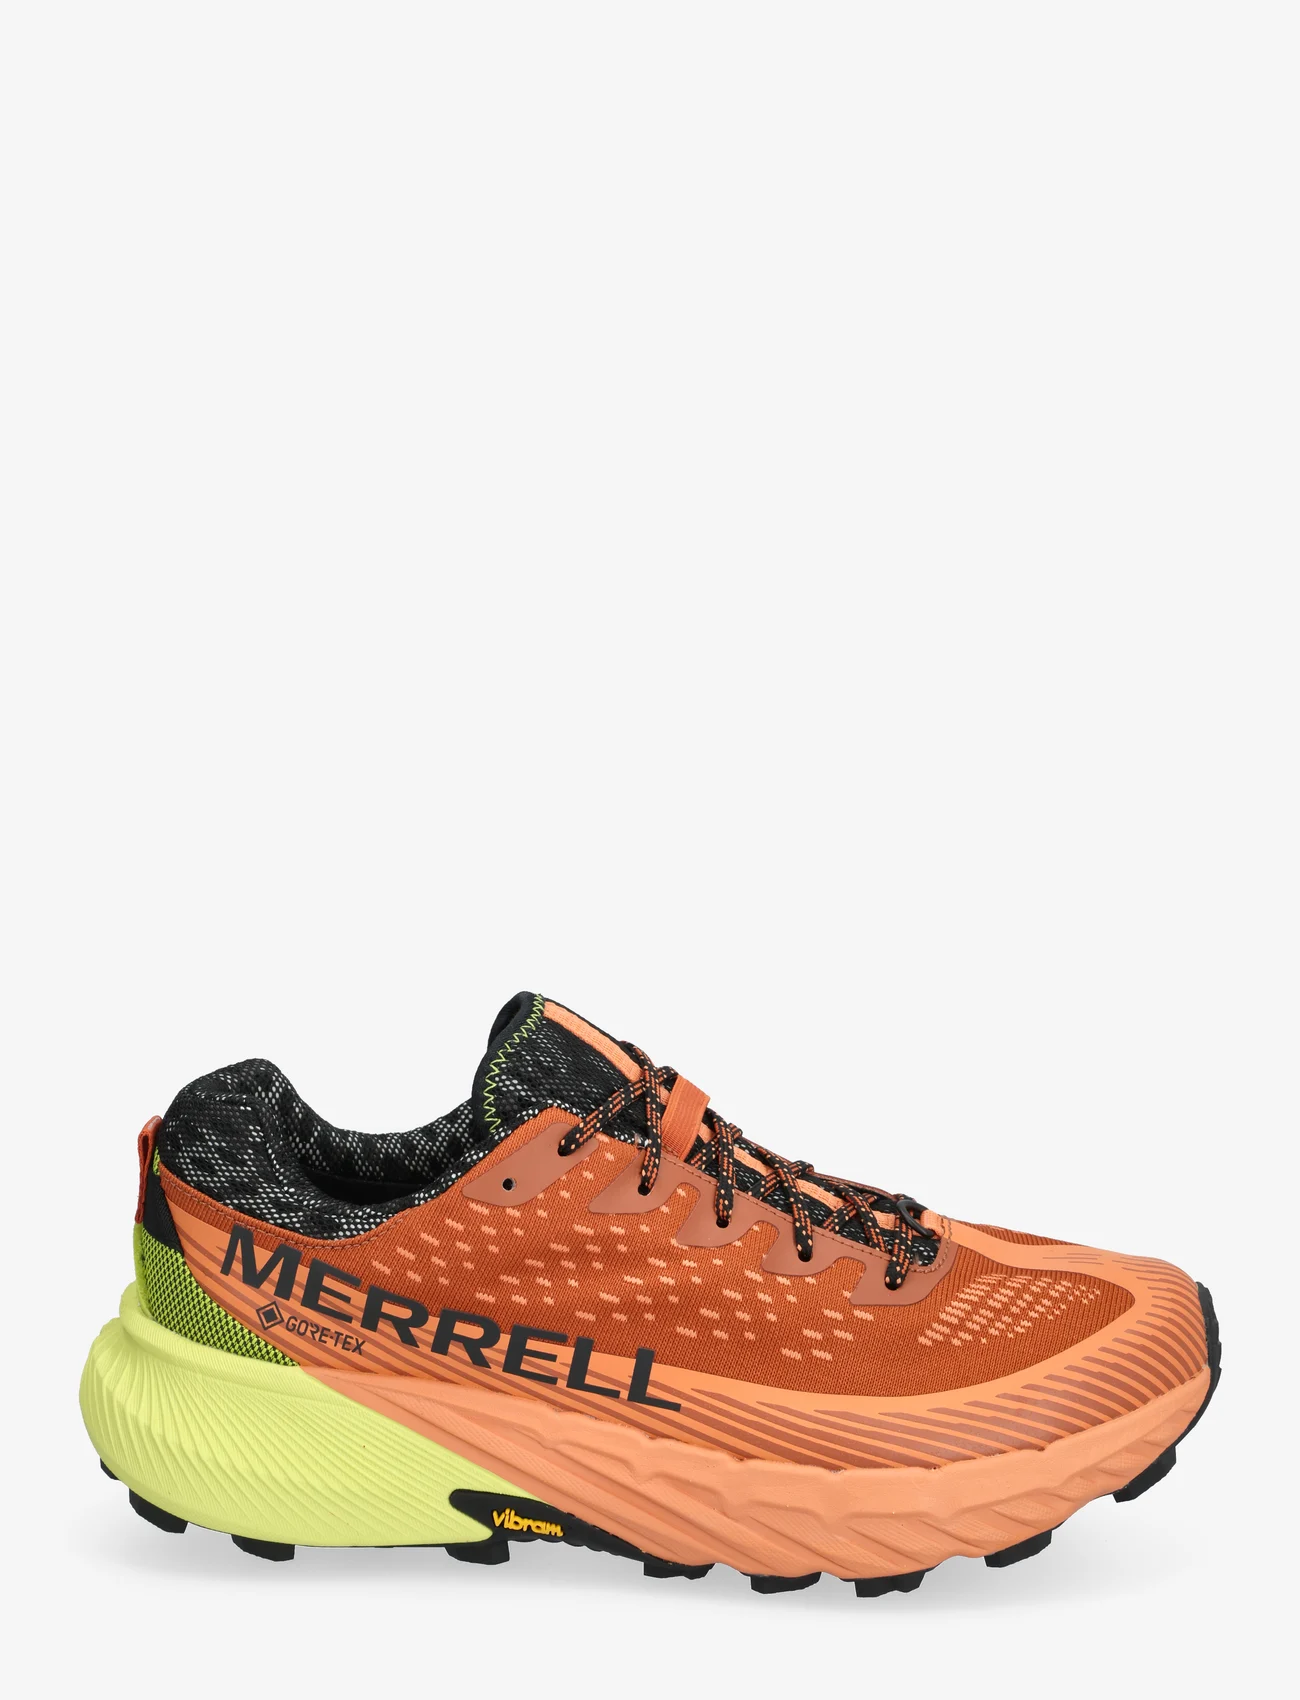 Merrell - Men's Agility Peak 5 GTX - Clay/Mel - loopschoenen - clay/melon - 1